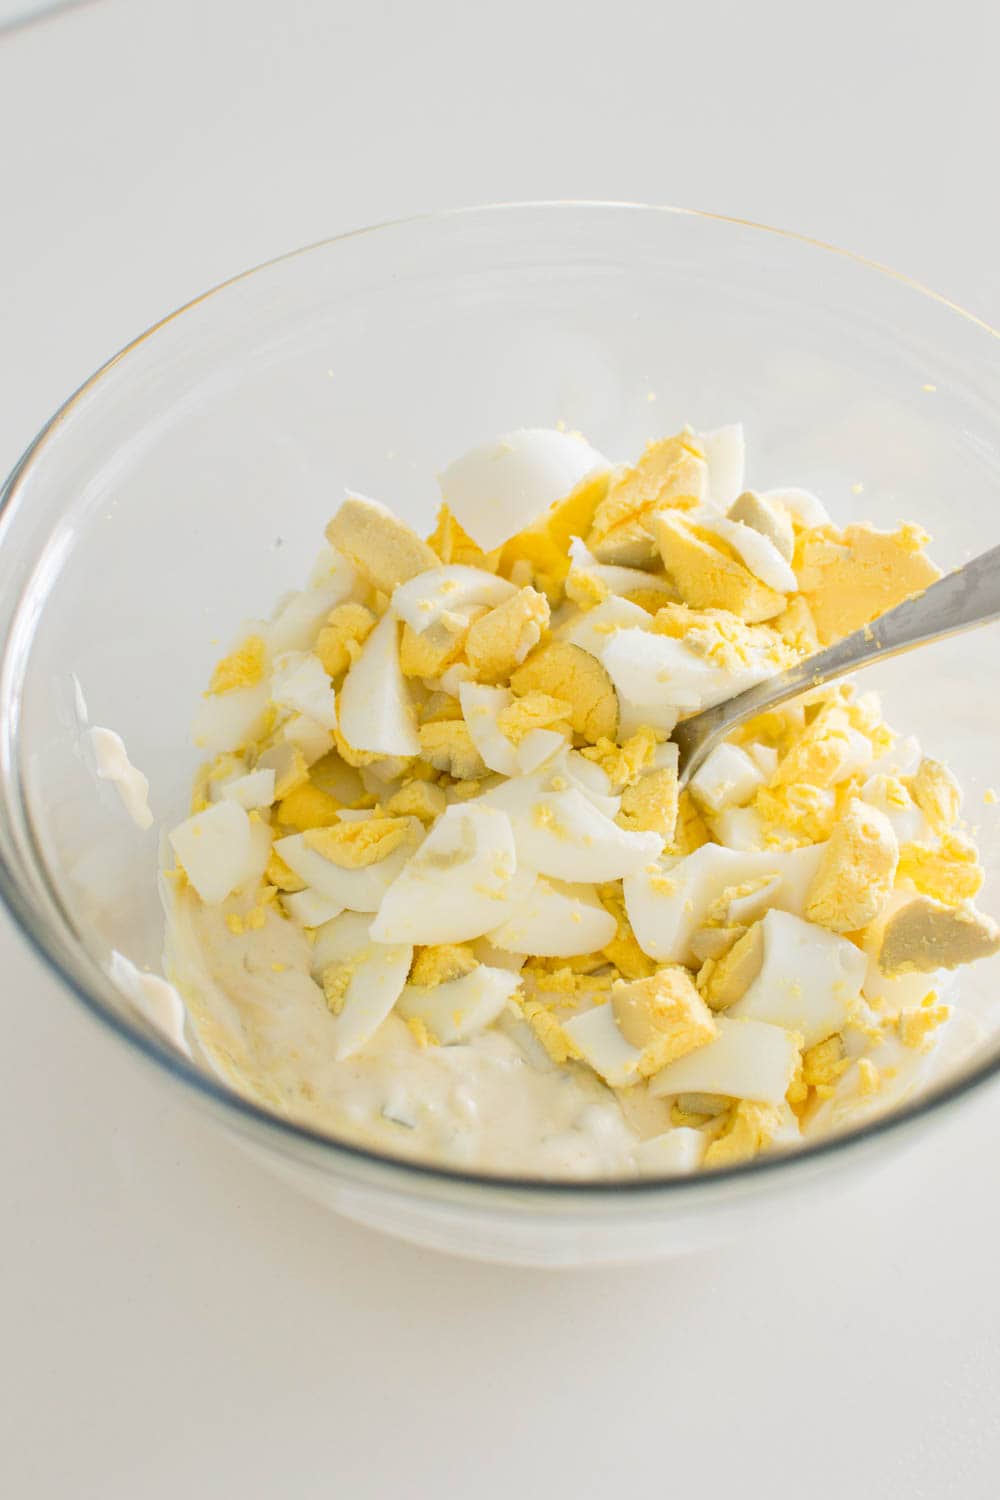 Adding chopped hard boiled eggs into homemade salad dressing